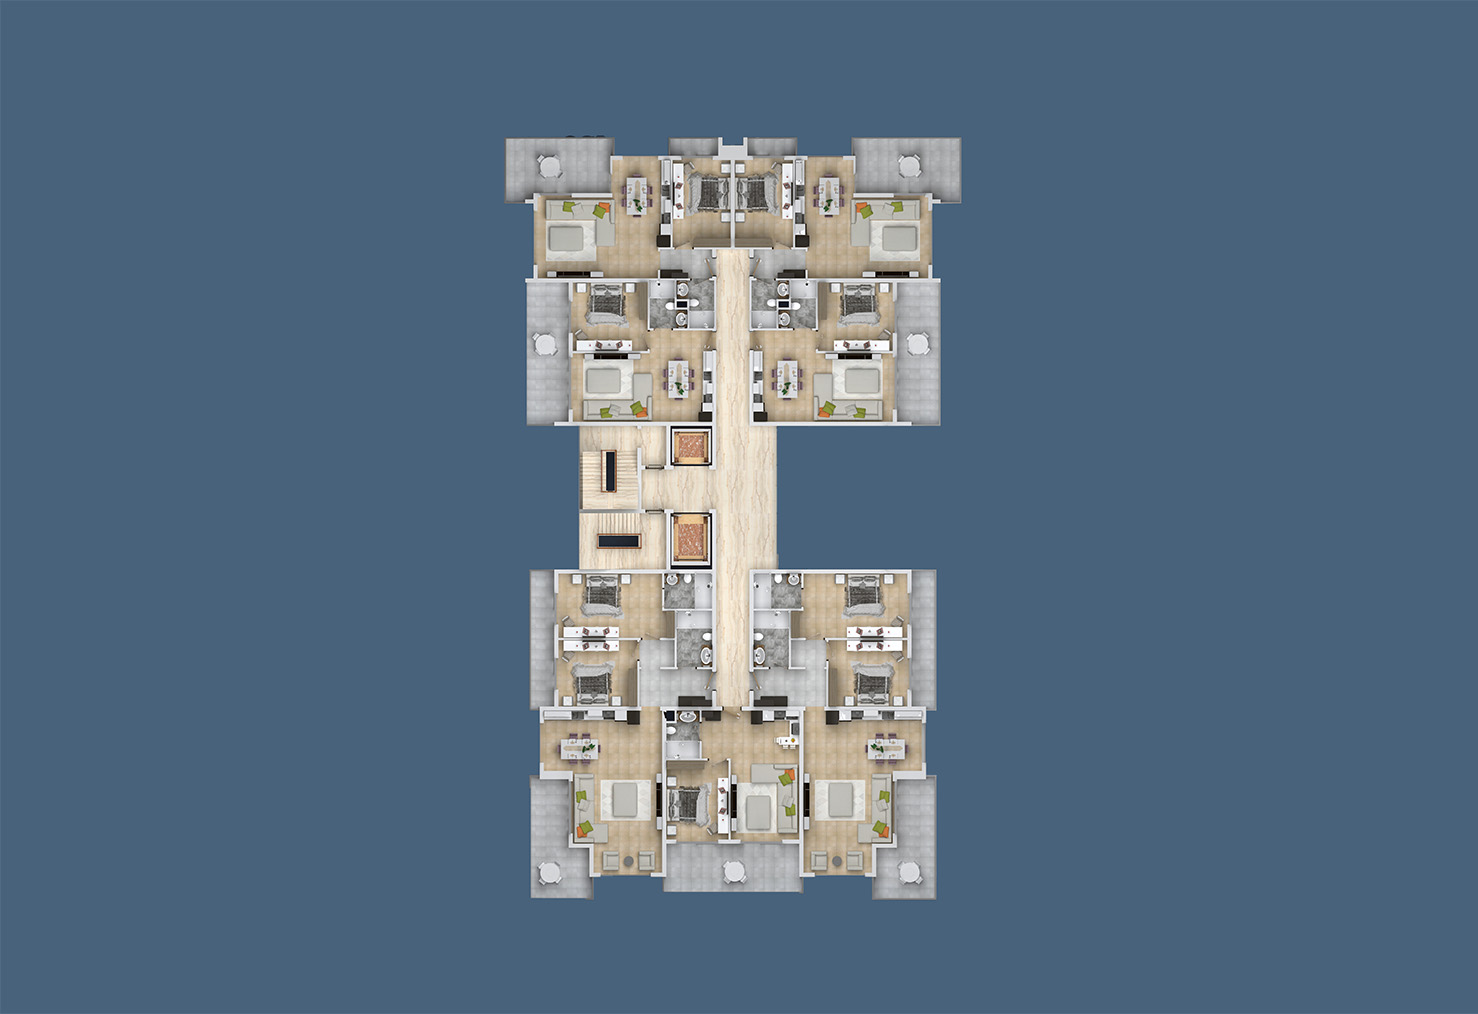 Gebäudeplan 3 Etage “B” Yekta Kingdom Trade Center